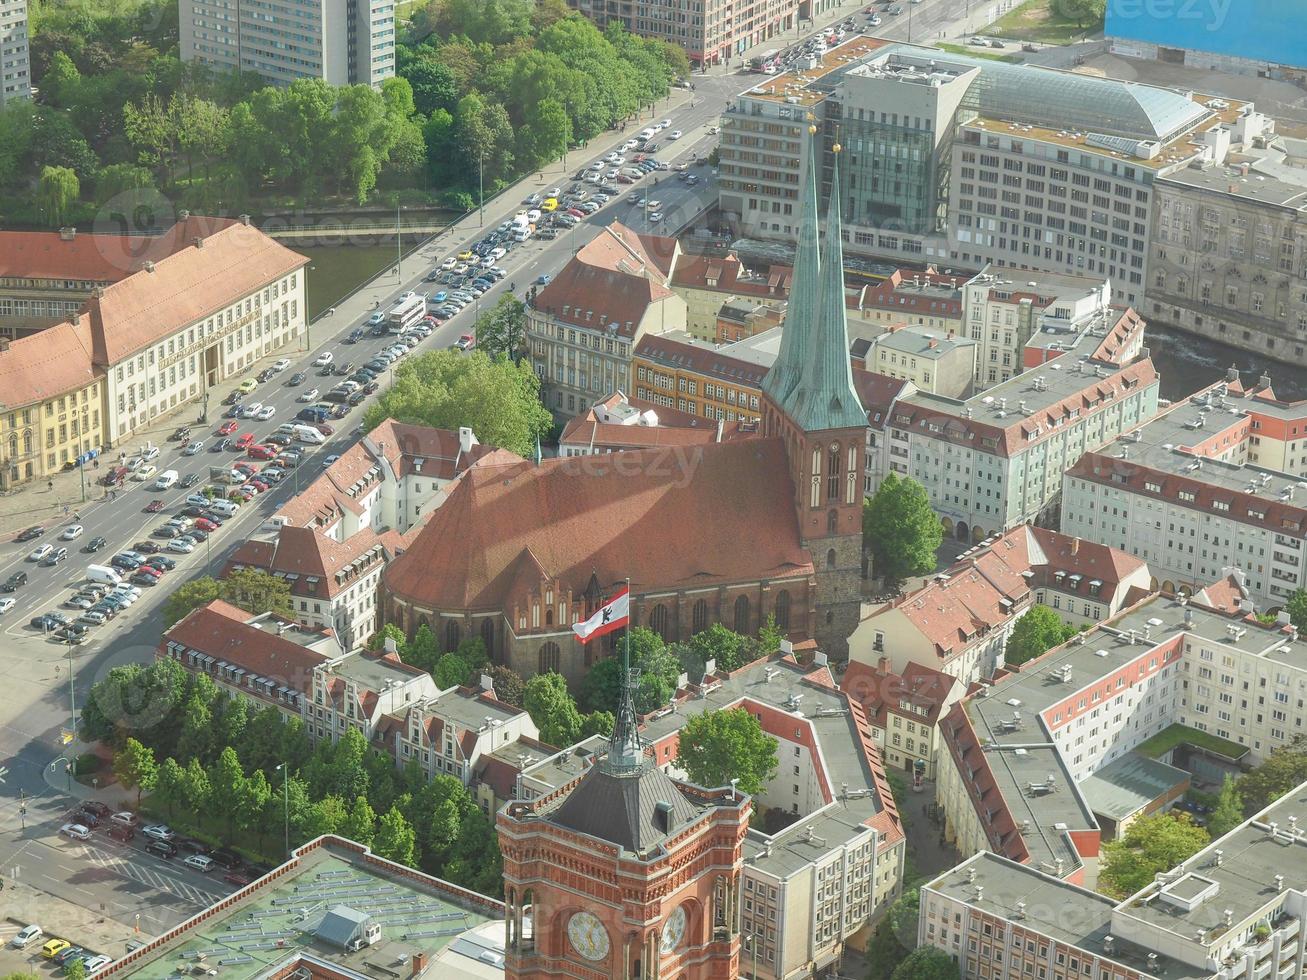 vue aérienne de berlin photo